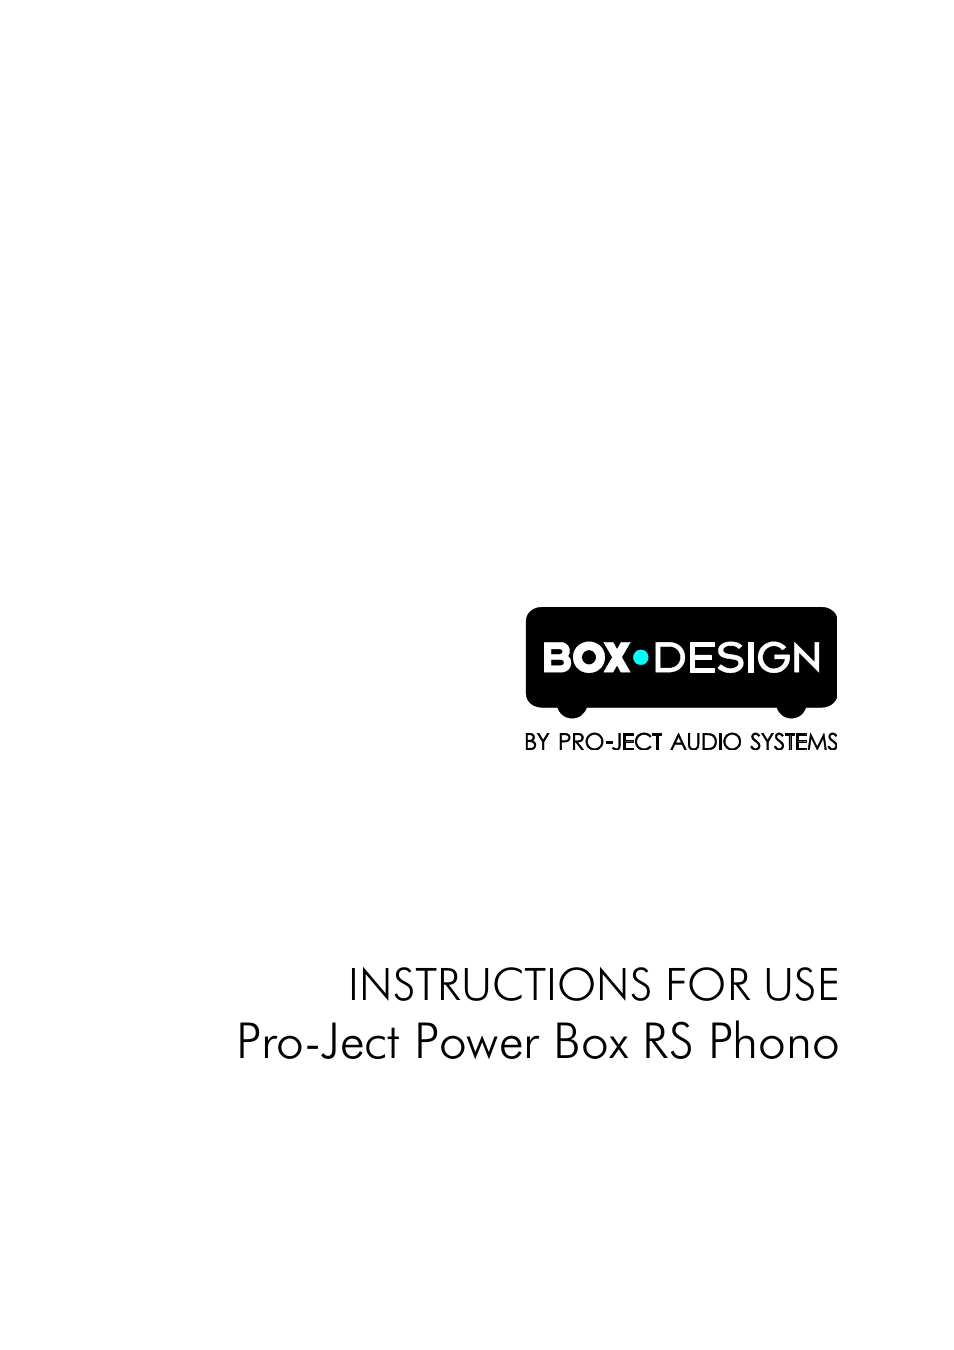 Power Box RS Phono